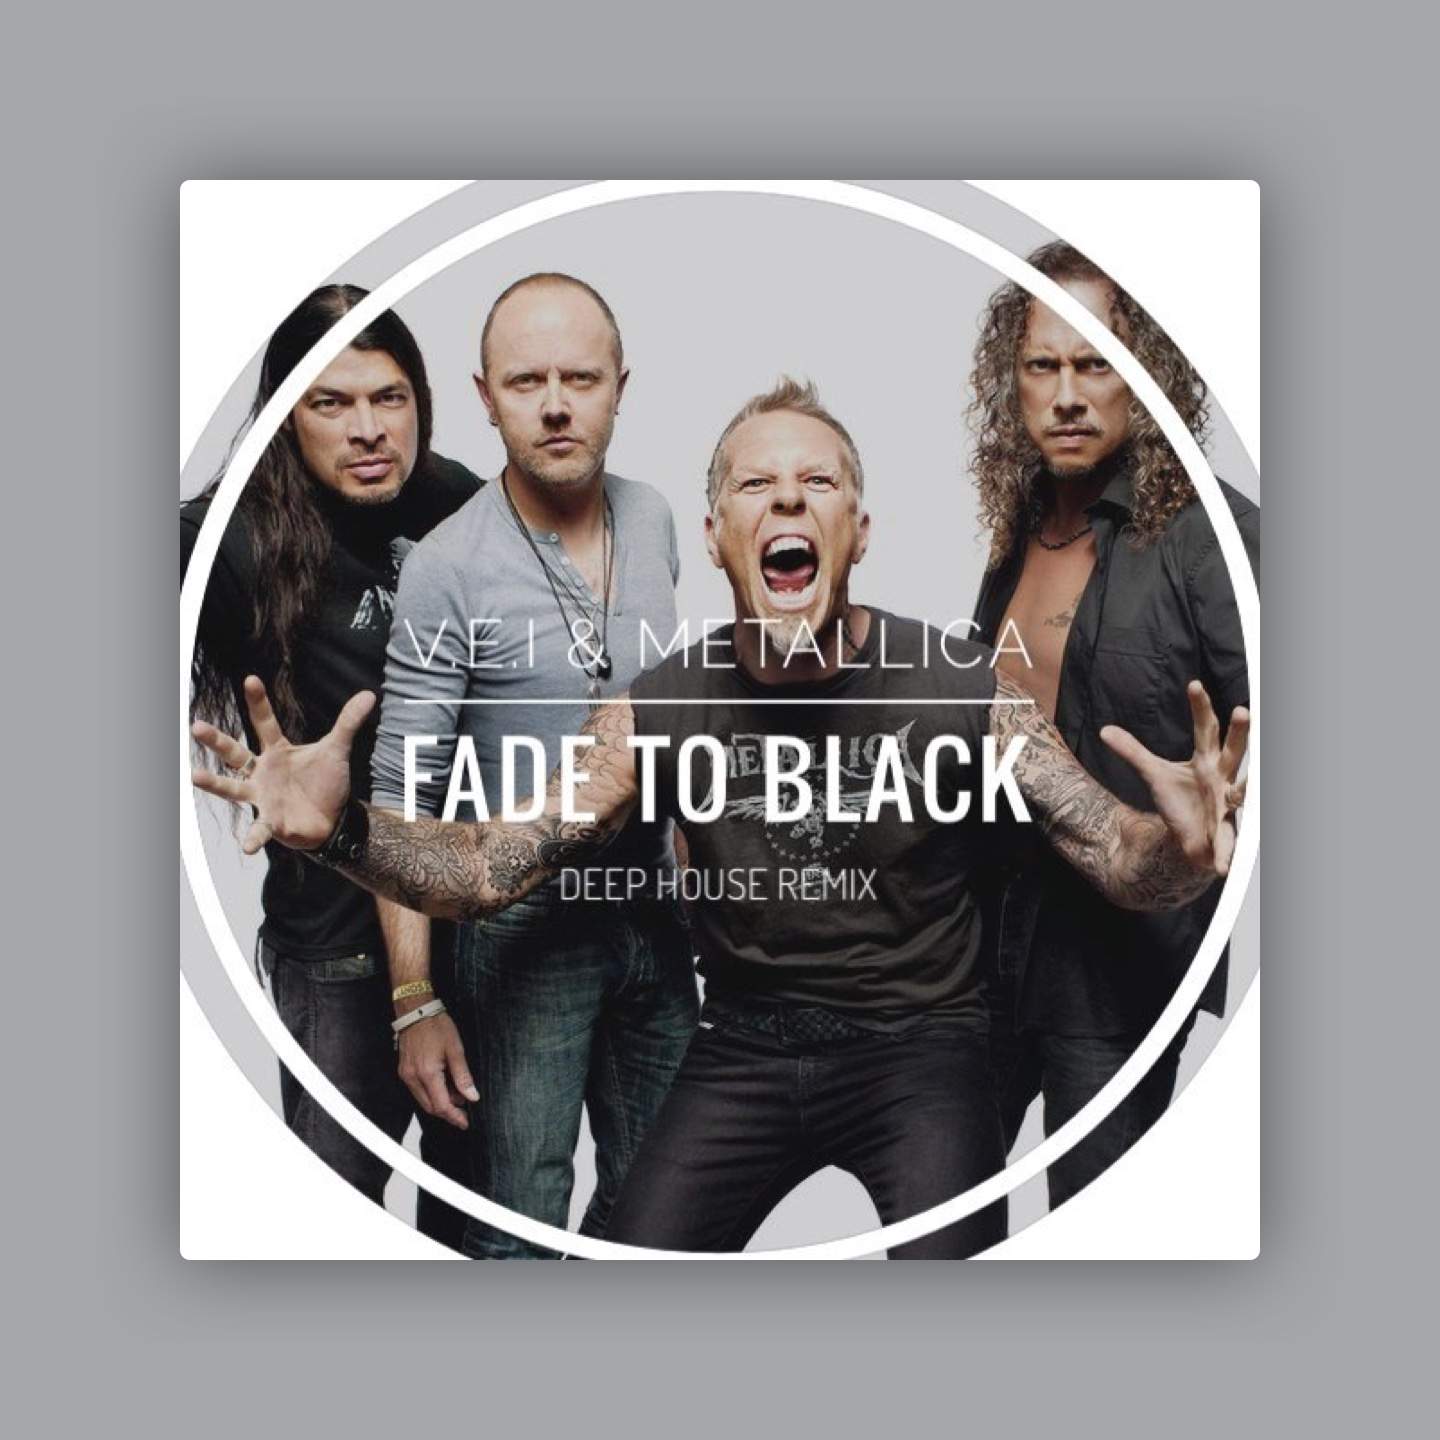 Fade To Black feat. Metallica (V.E.I Deep House Remix) -
                    Luxe radio